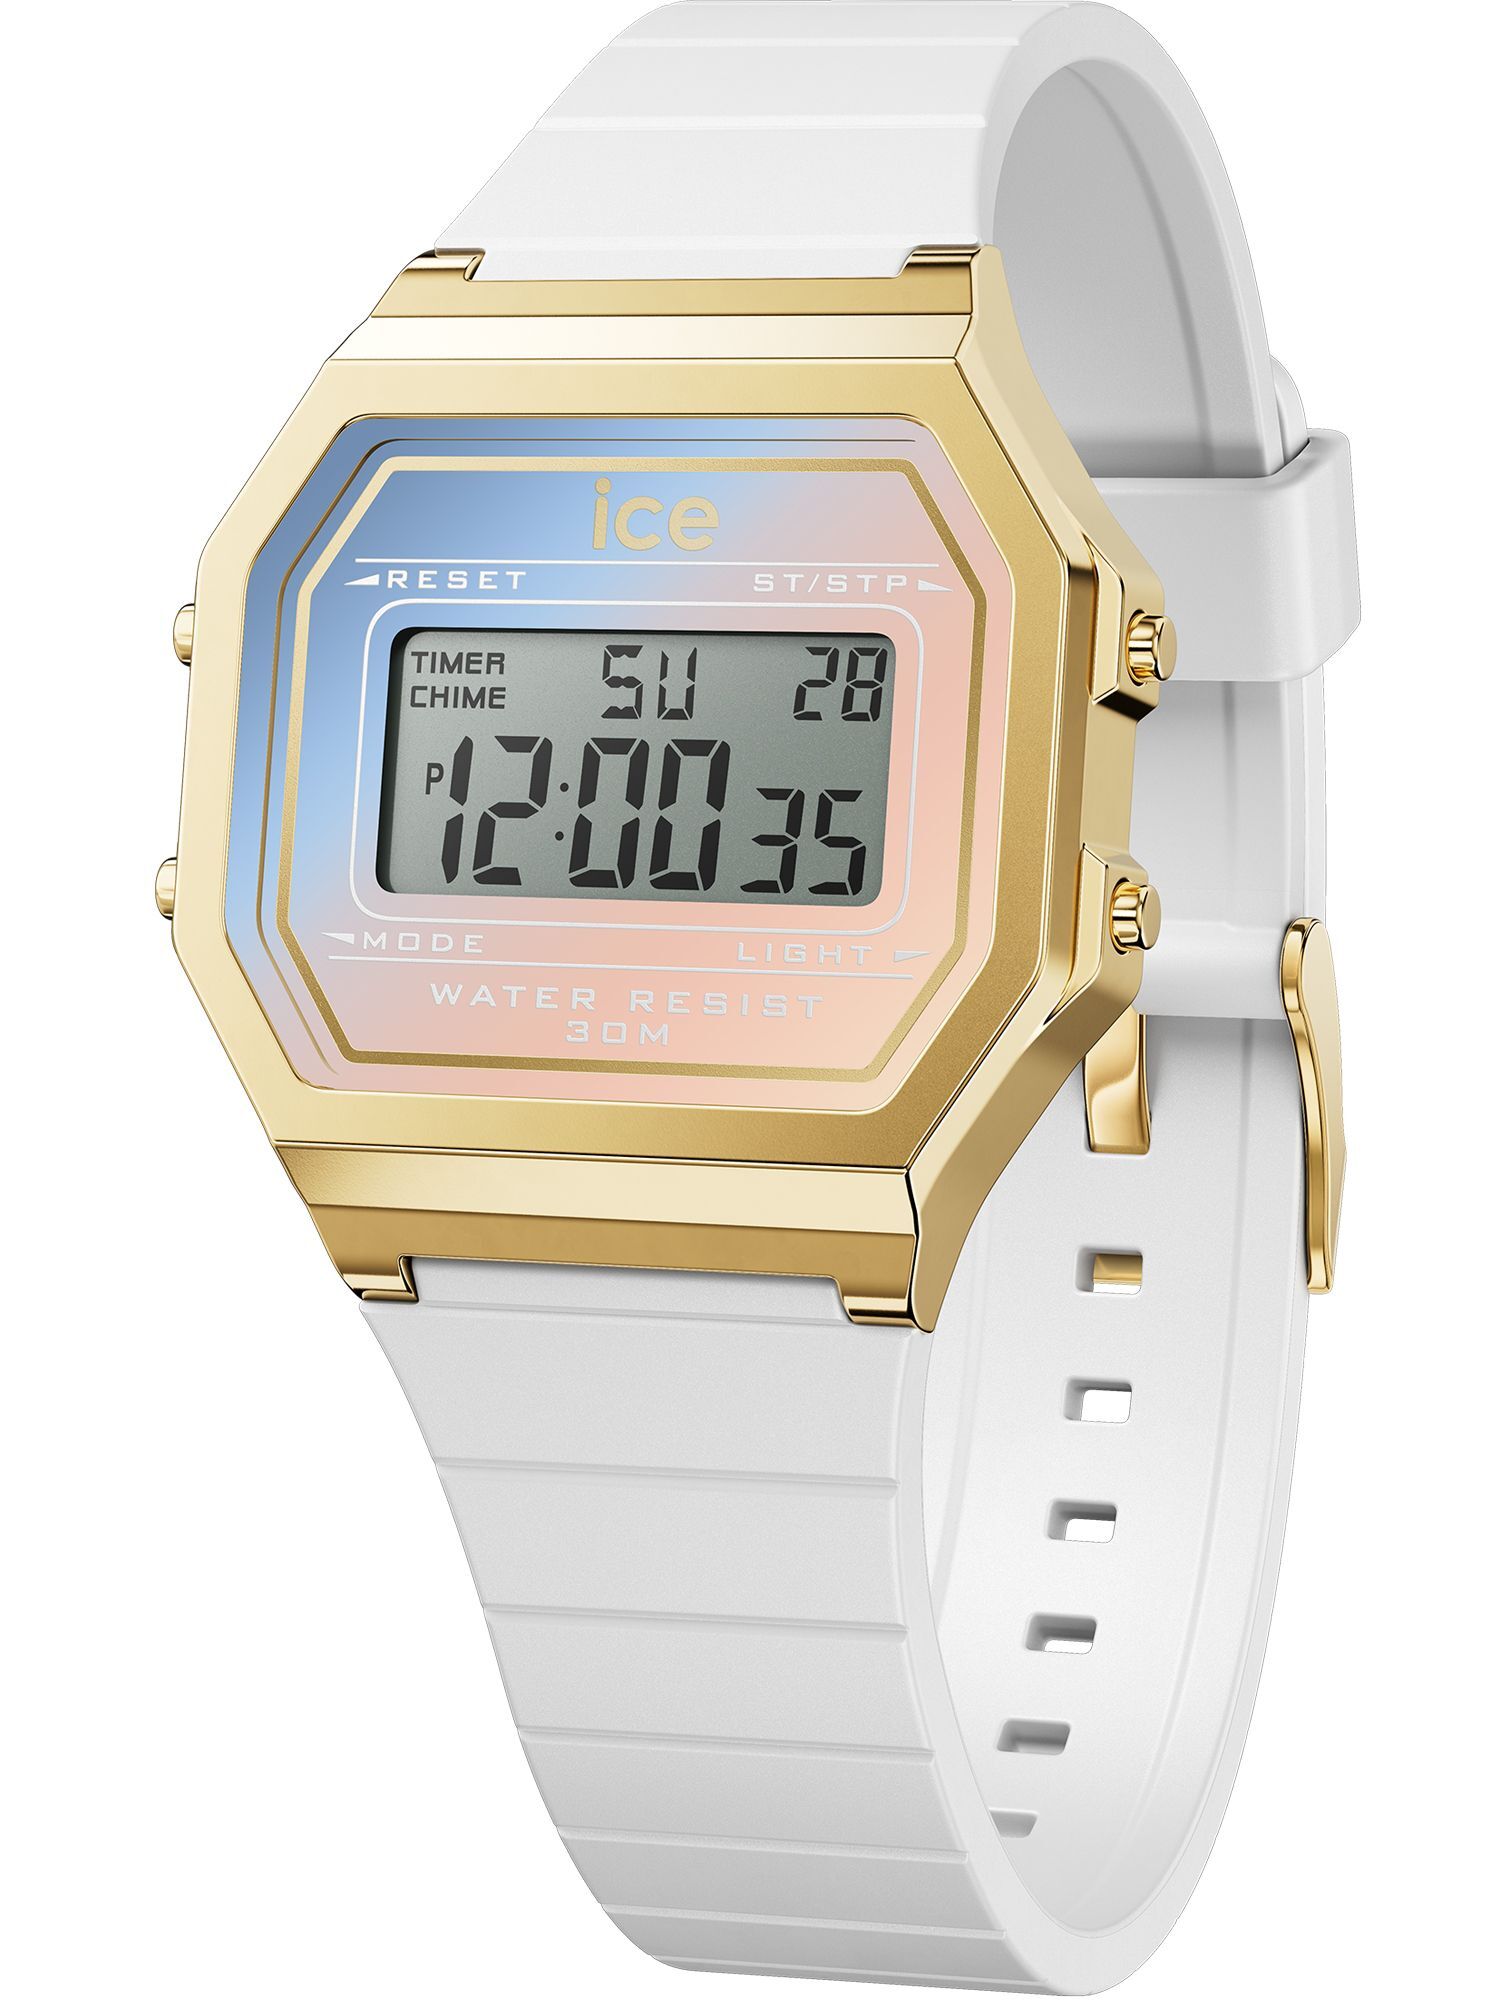 Hodinky Ice-Watch 022718 ICE digit retro white majestic Uhr Datum Alarm weiß